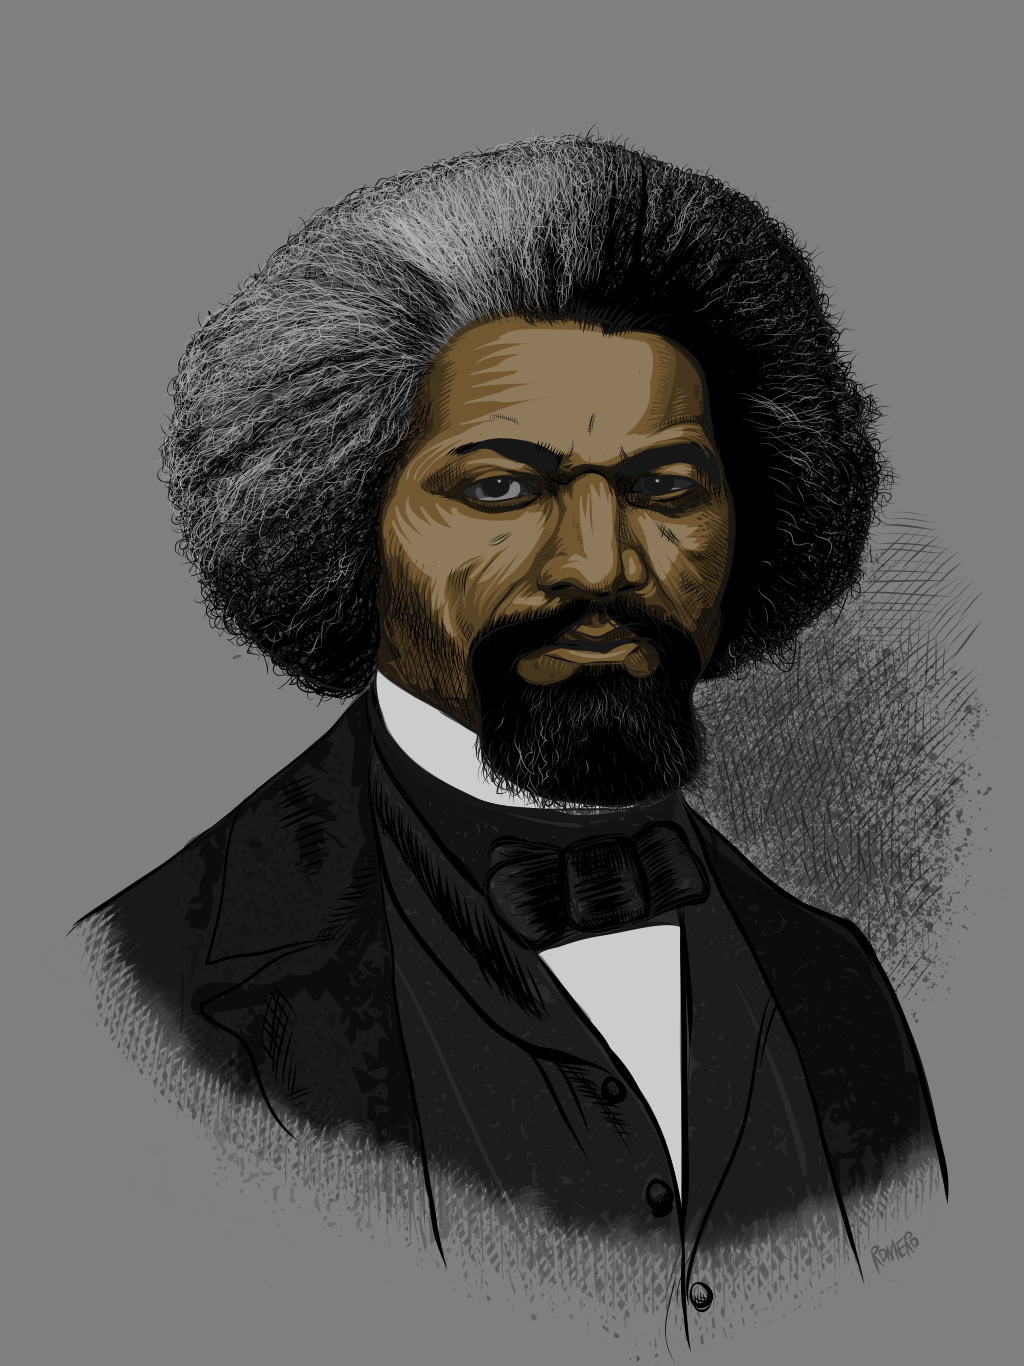 adobedraw black history month Civil Rights african american slavery history digital portrait vector art Abolition  